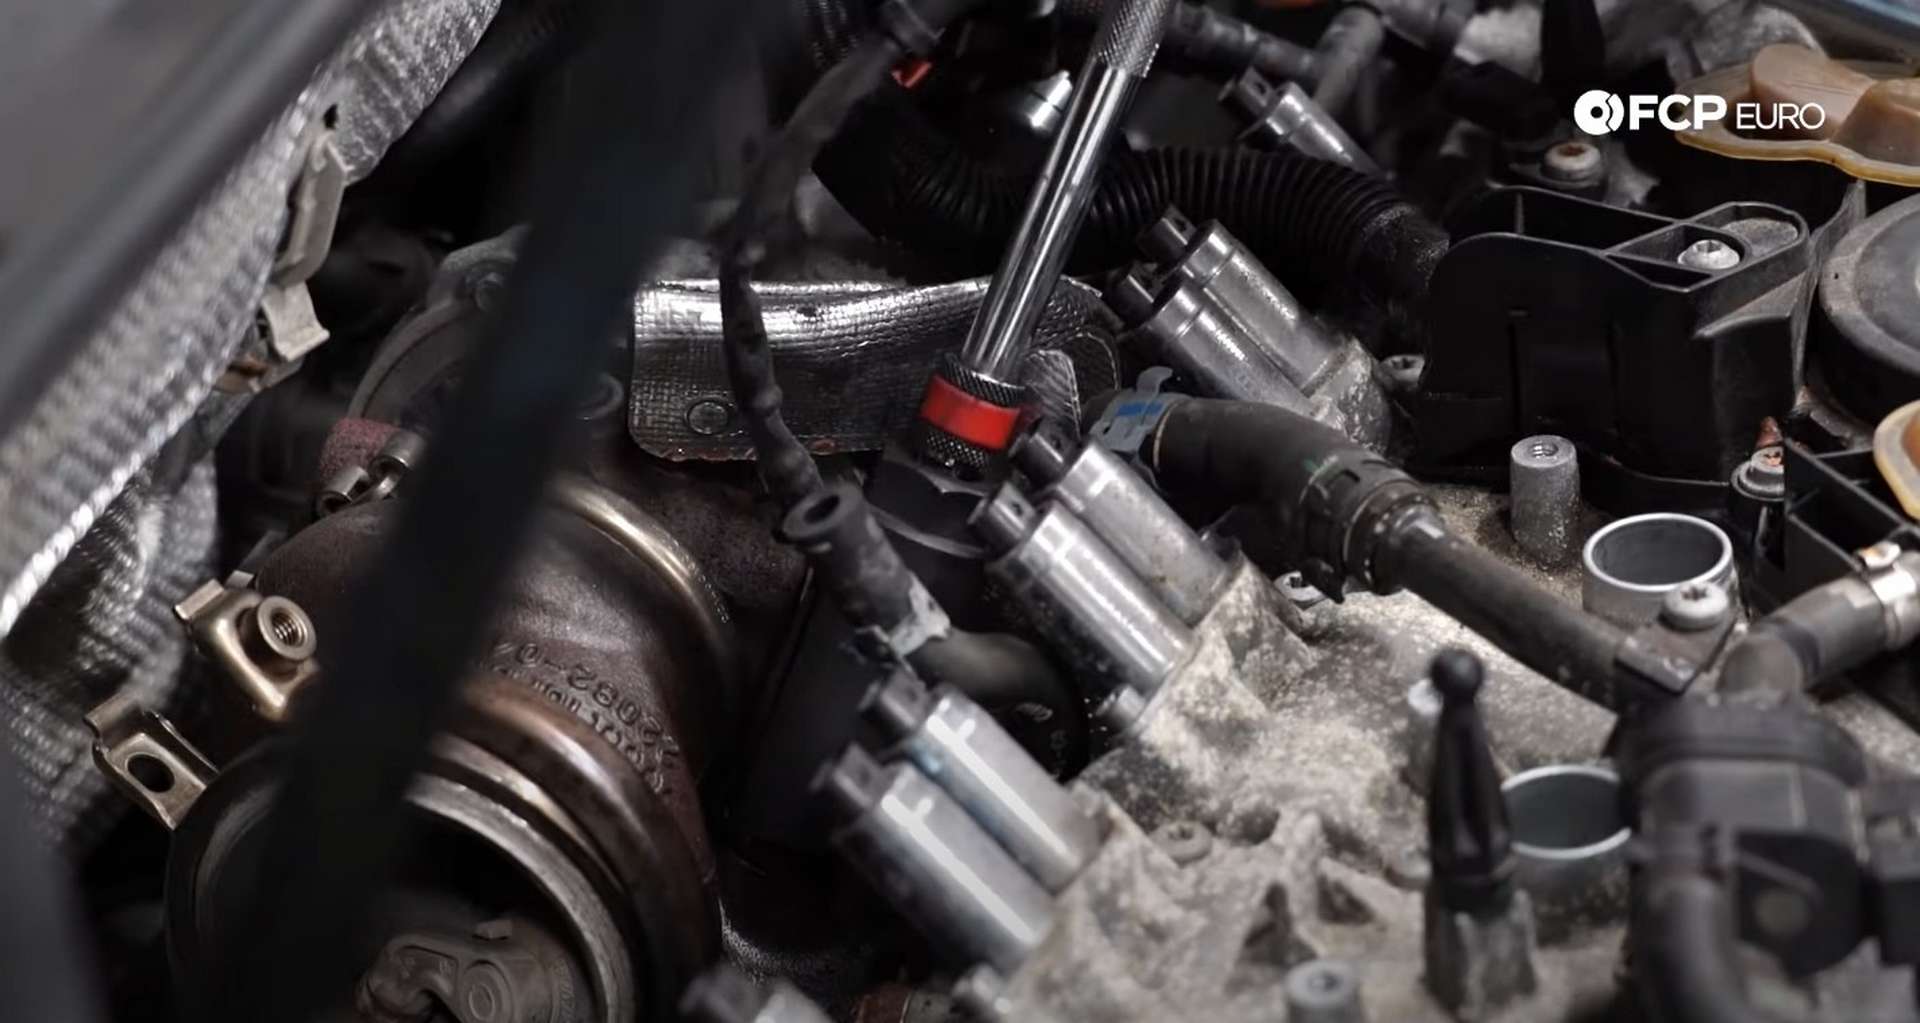 DIY MK7 VW GTI Turbocharger Upgrade removing O2 sensor from the turbocharger